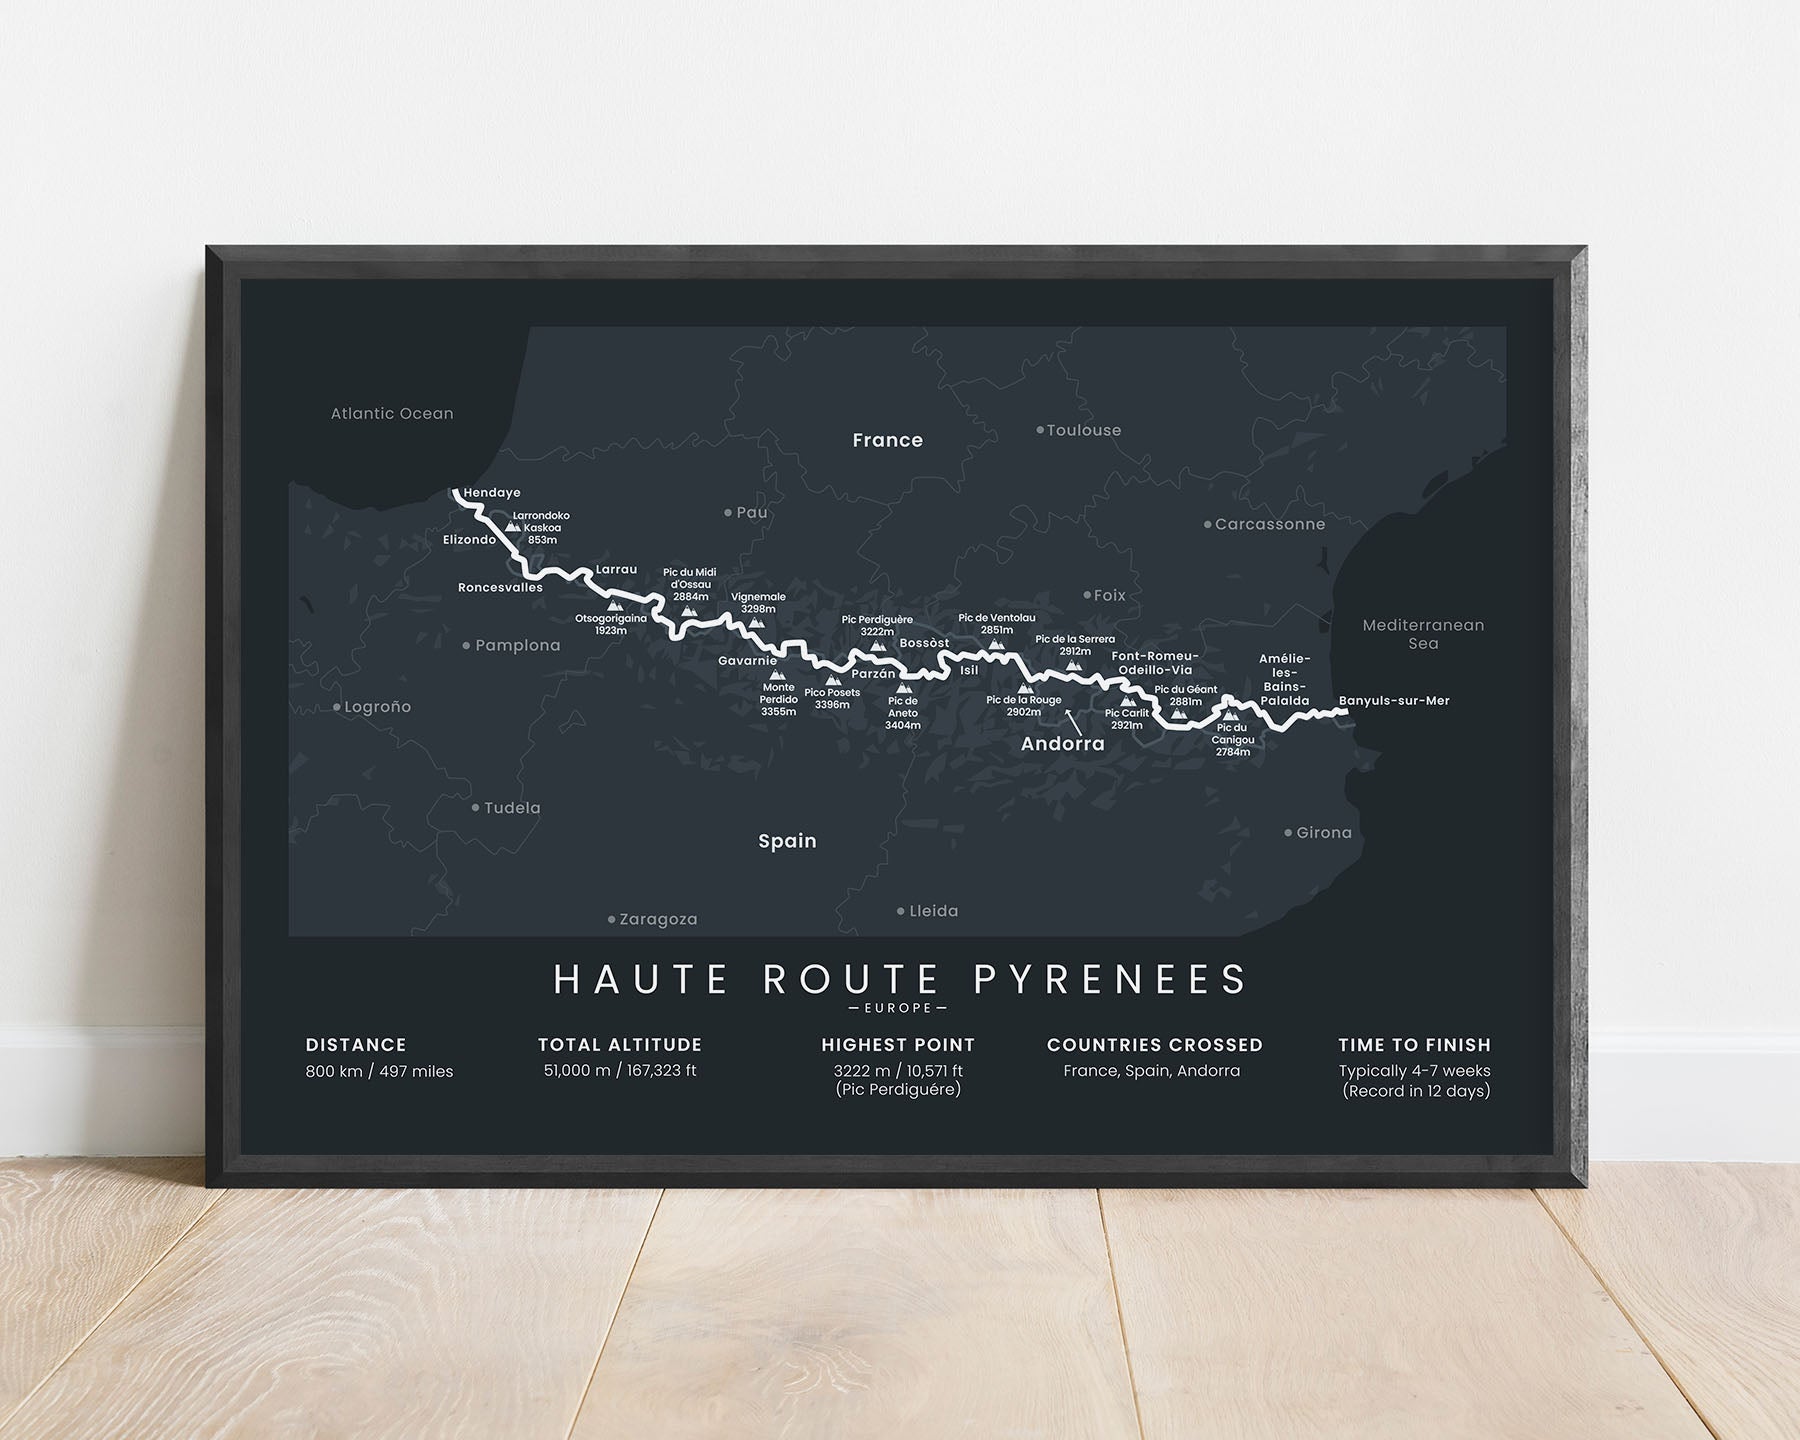 Haute Randonnée Pyrénéenne trek wall map with black background (Andorra)